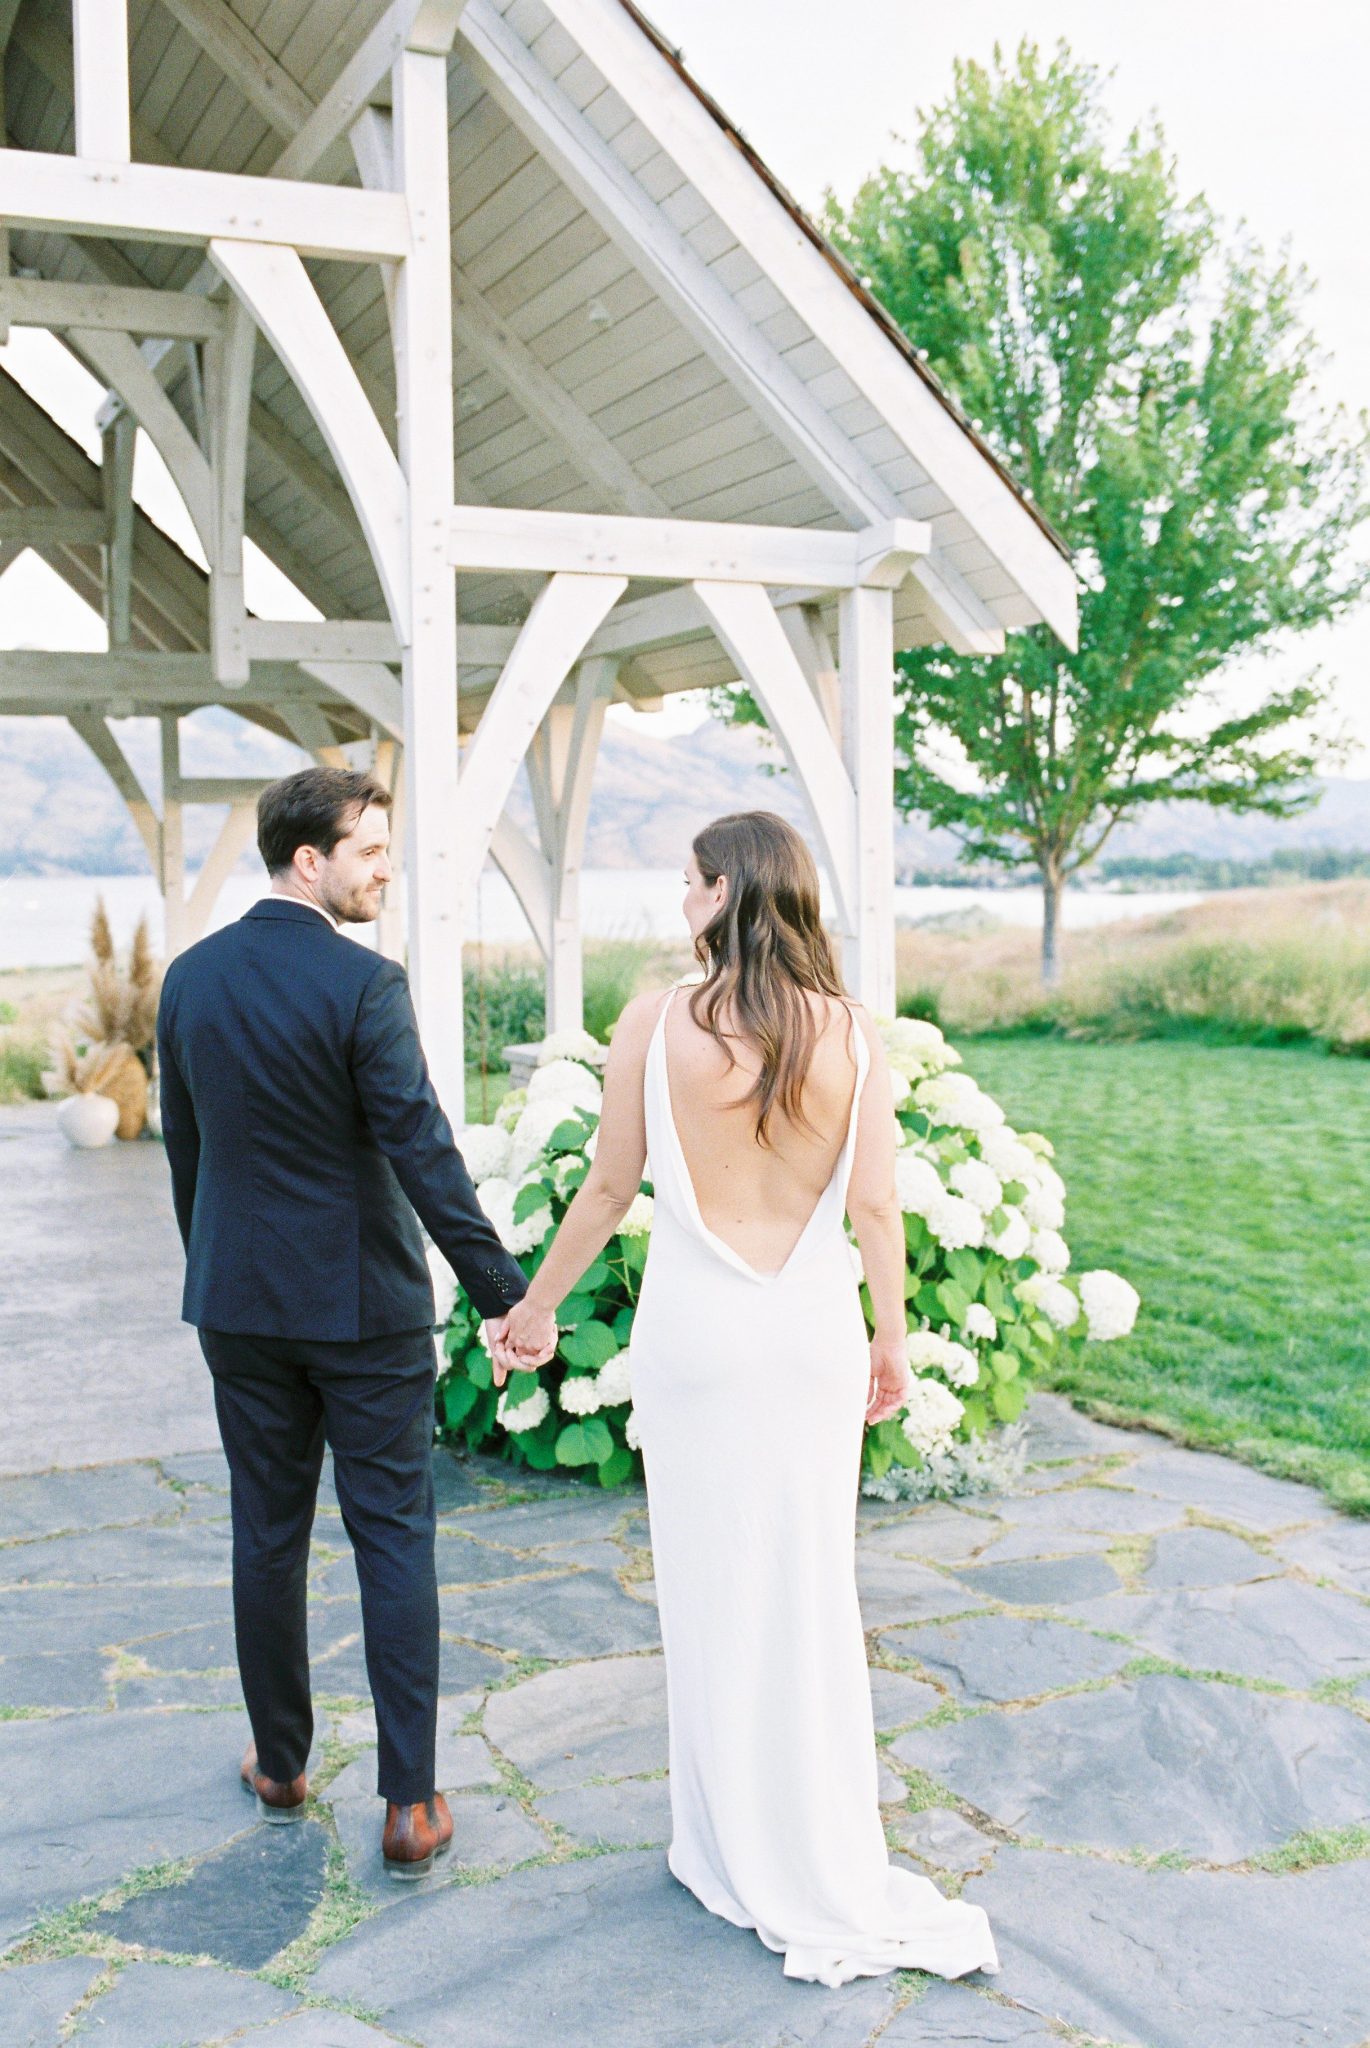 Modern bride and groom walk towards the chapel inspired gazebo at Sanctuary Gardens in Okanagan British Columbia